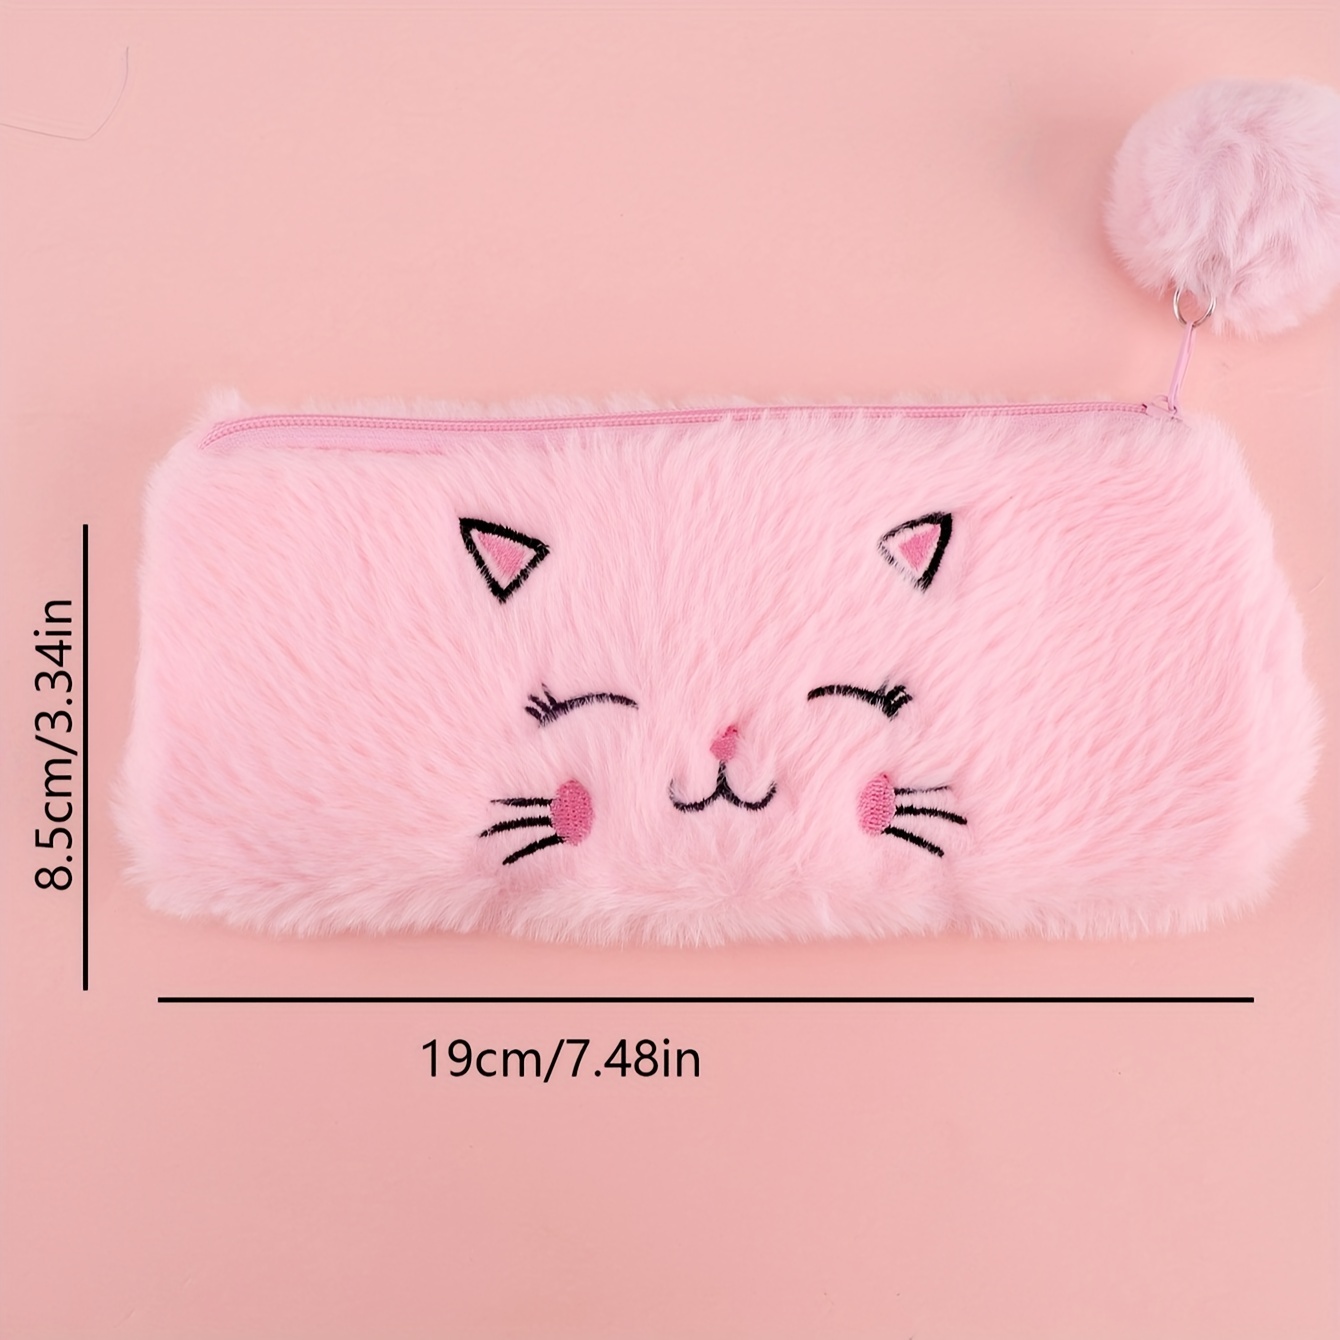 OUZPGAQ Cute Cat Pencil Case Slim Pink Triangle Pen Bag Kawaii Kitten Makeup Bag Pencil Pouch Small Cosmetics Bag Box Gadget Stationary Bag Gift for